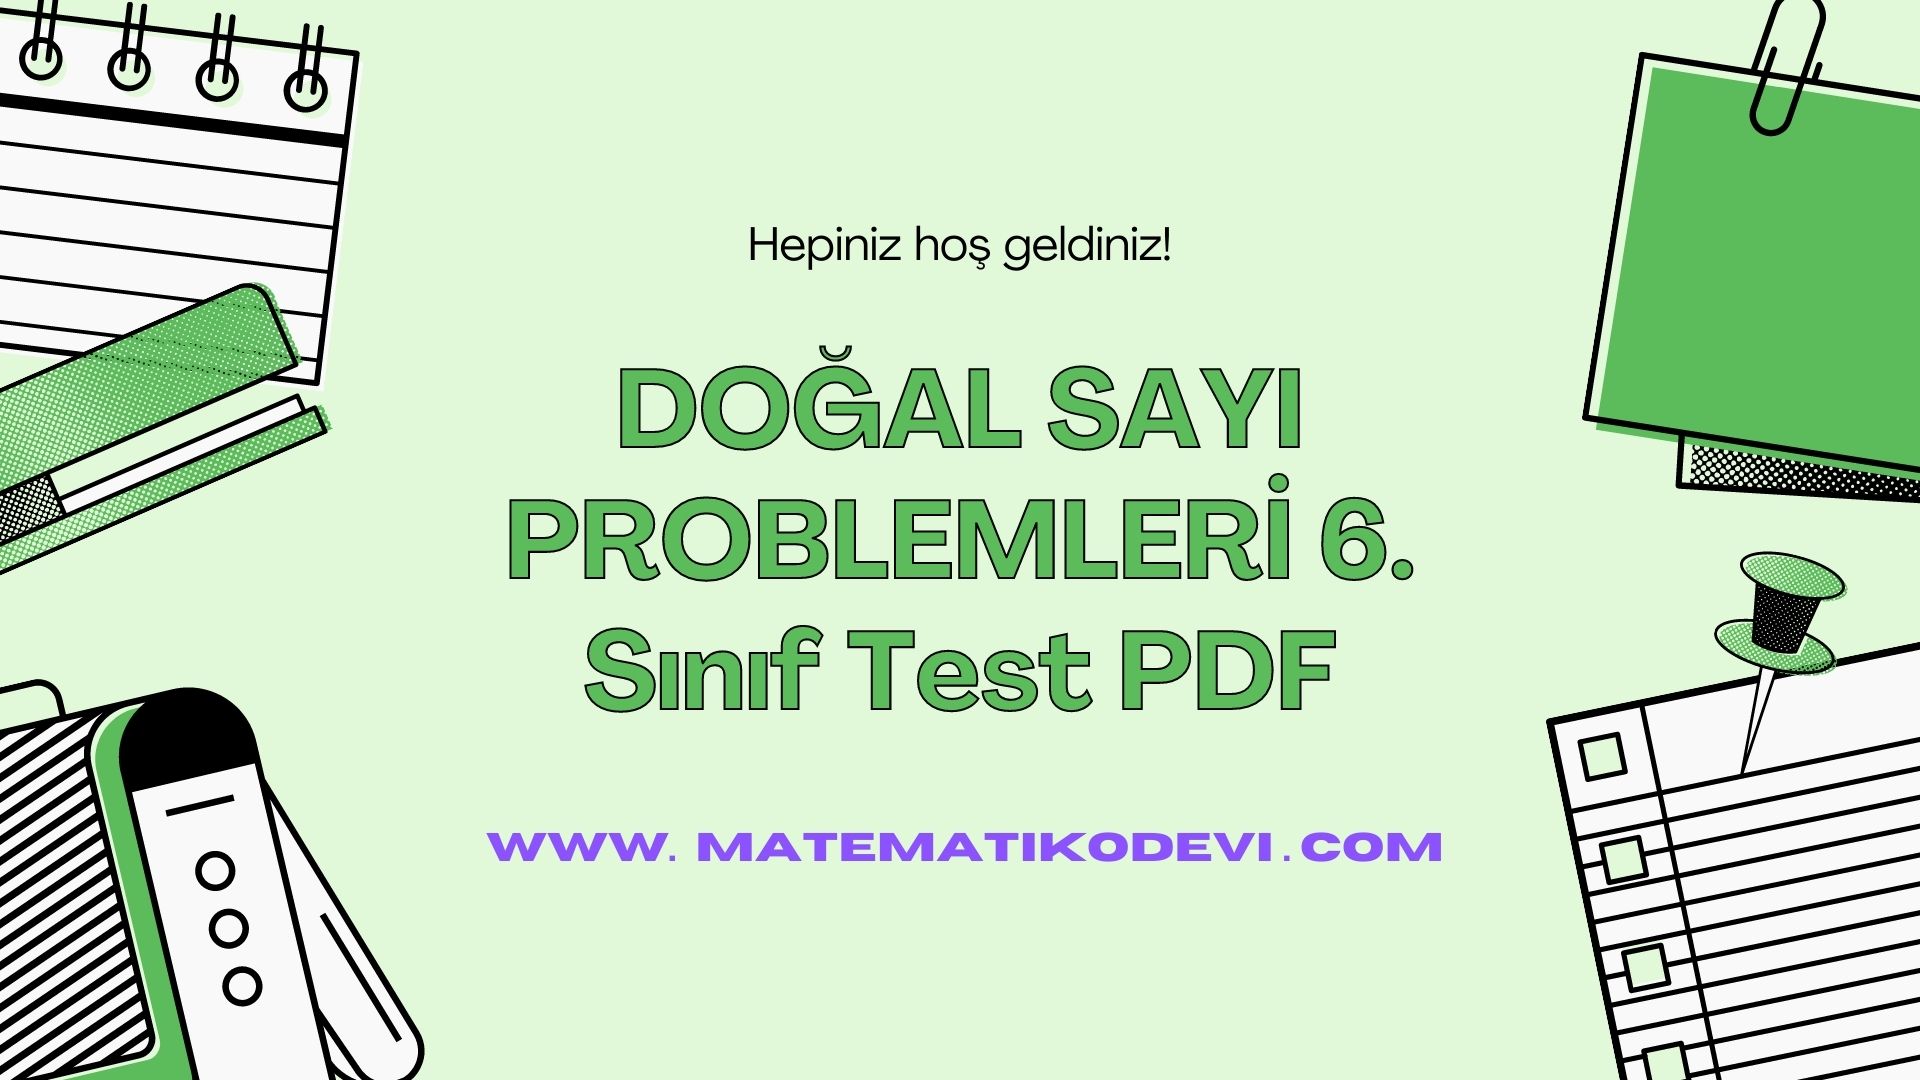 DOGAL SAYI PROBLEMLERI 6. Sinif Test PDF